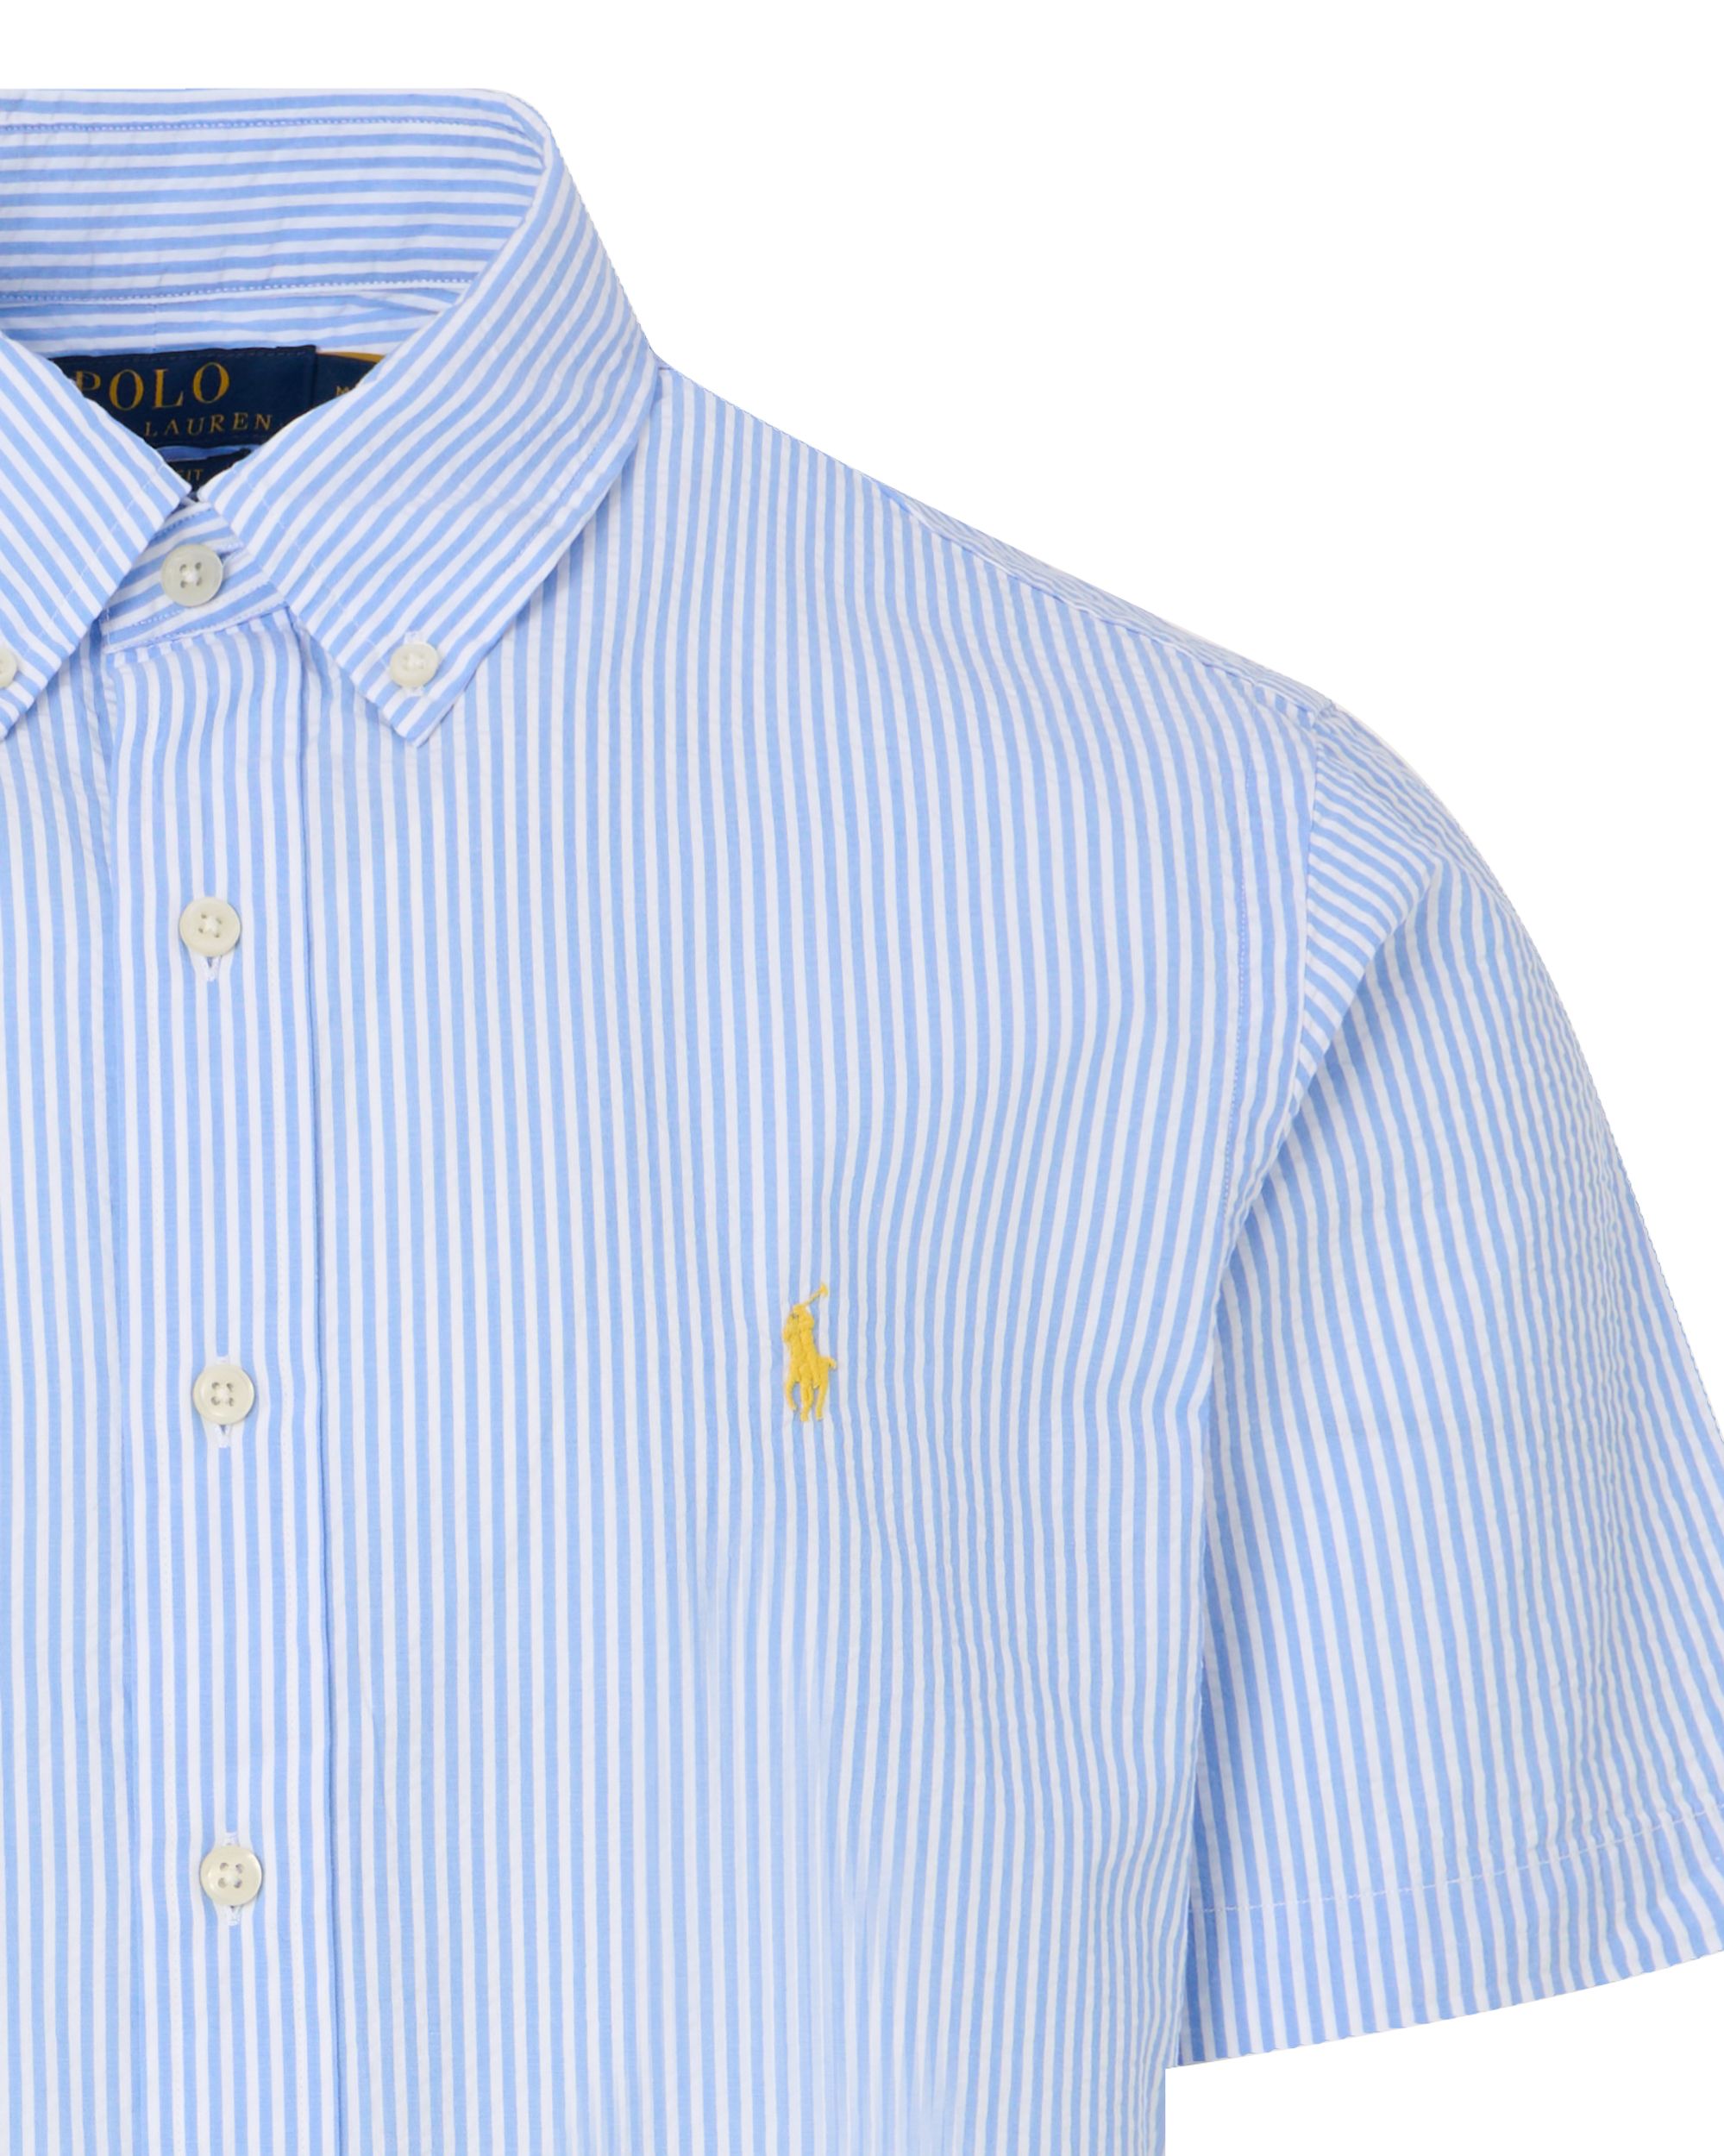 Polo Ralph Lauren Casual Overhemd KM Blauw 095266-001-L